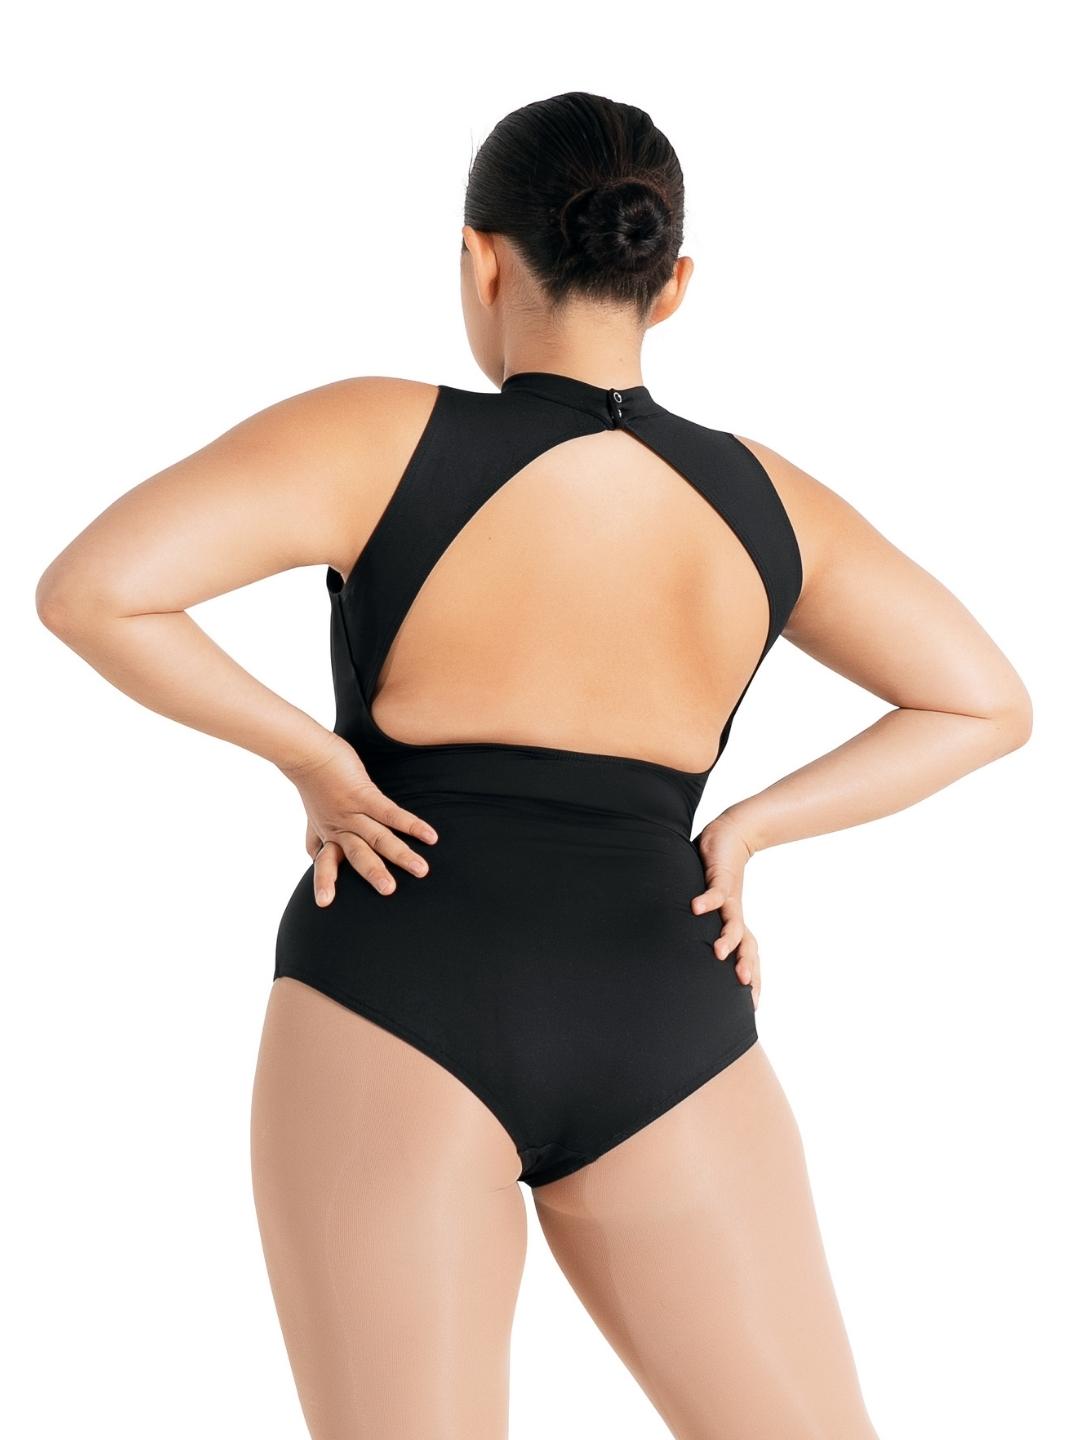 Capezio black women's leotard bodysuit with built in bra size Large dance